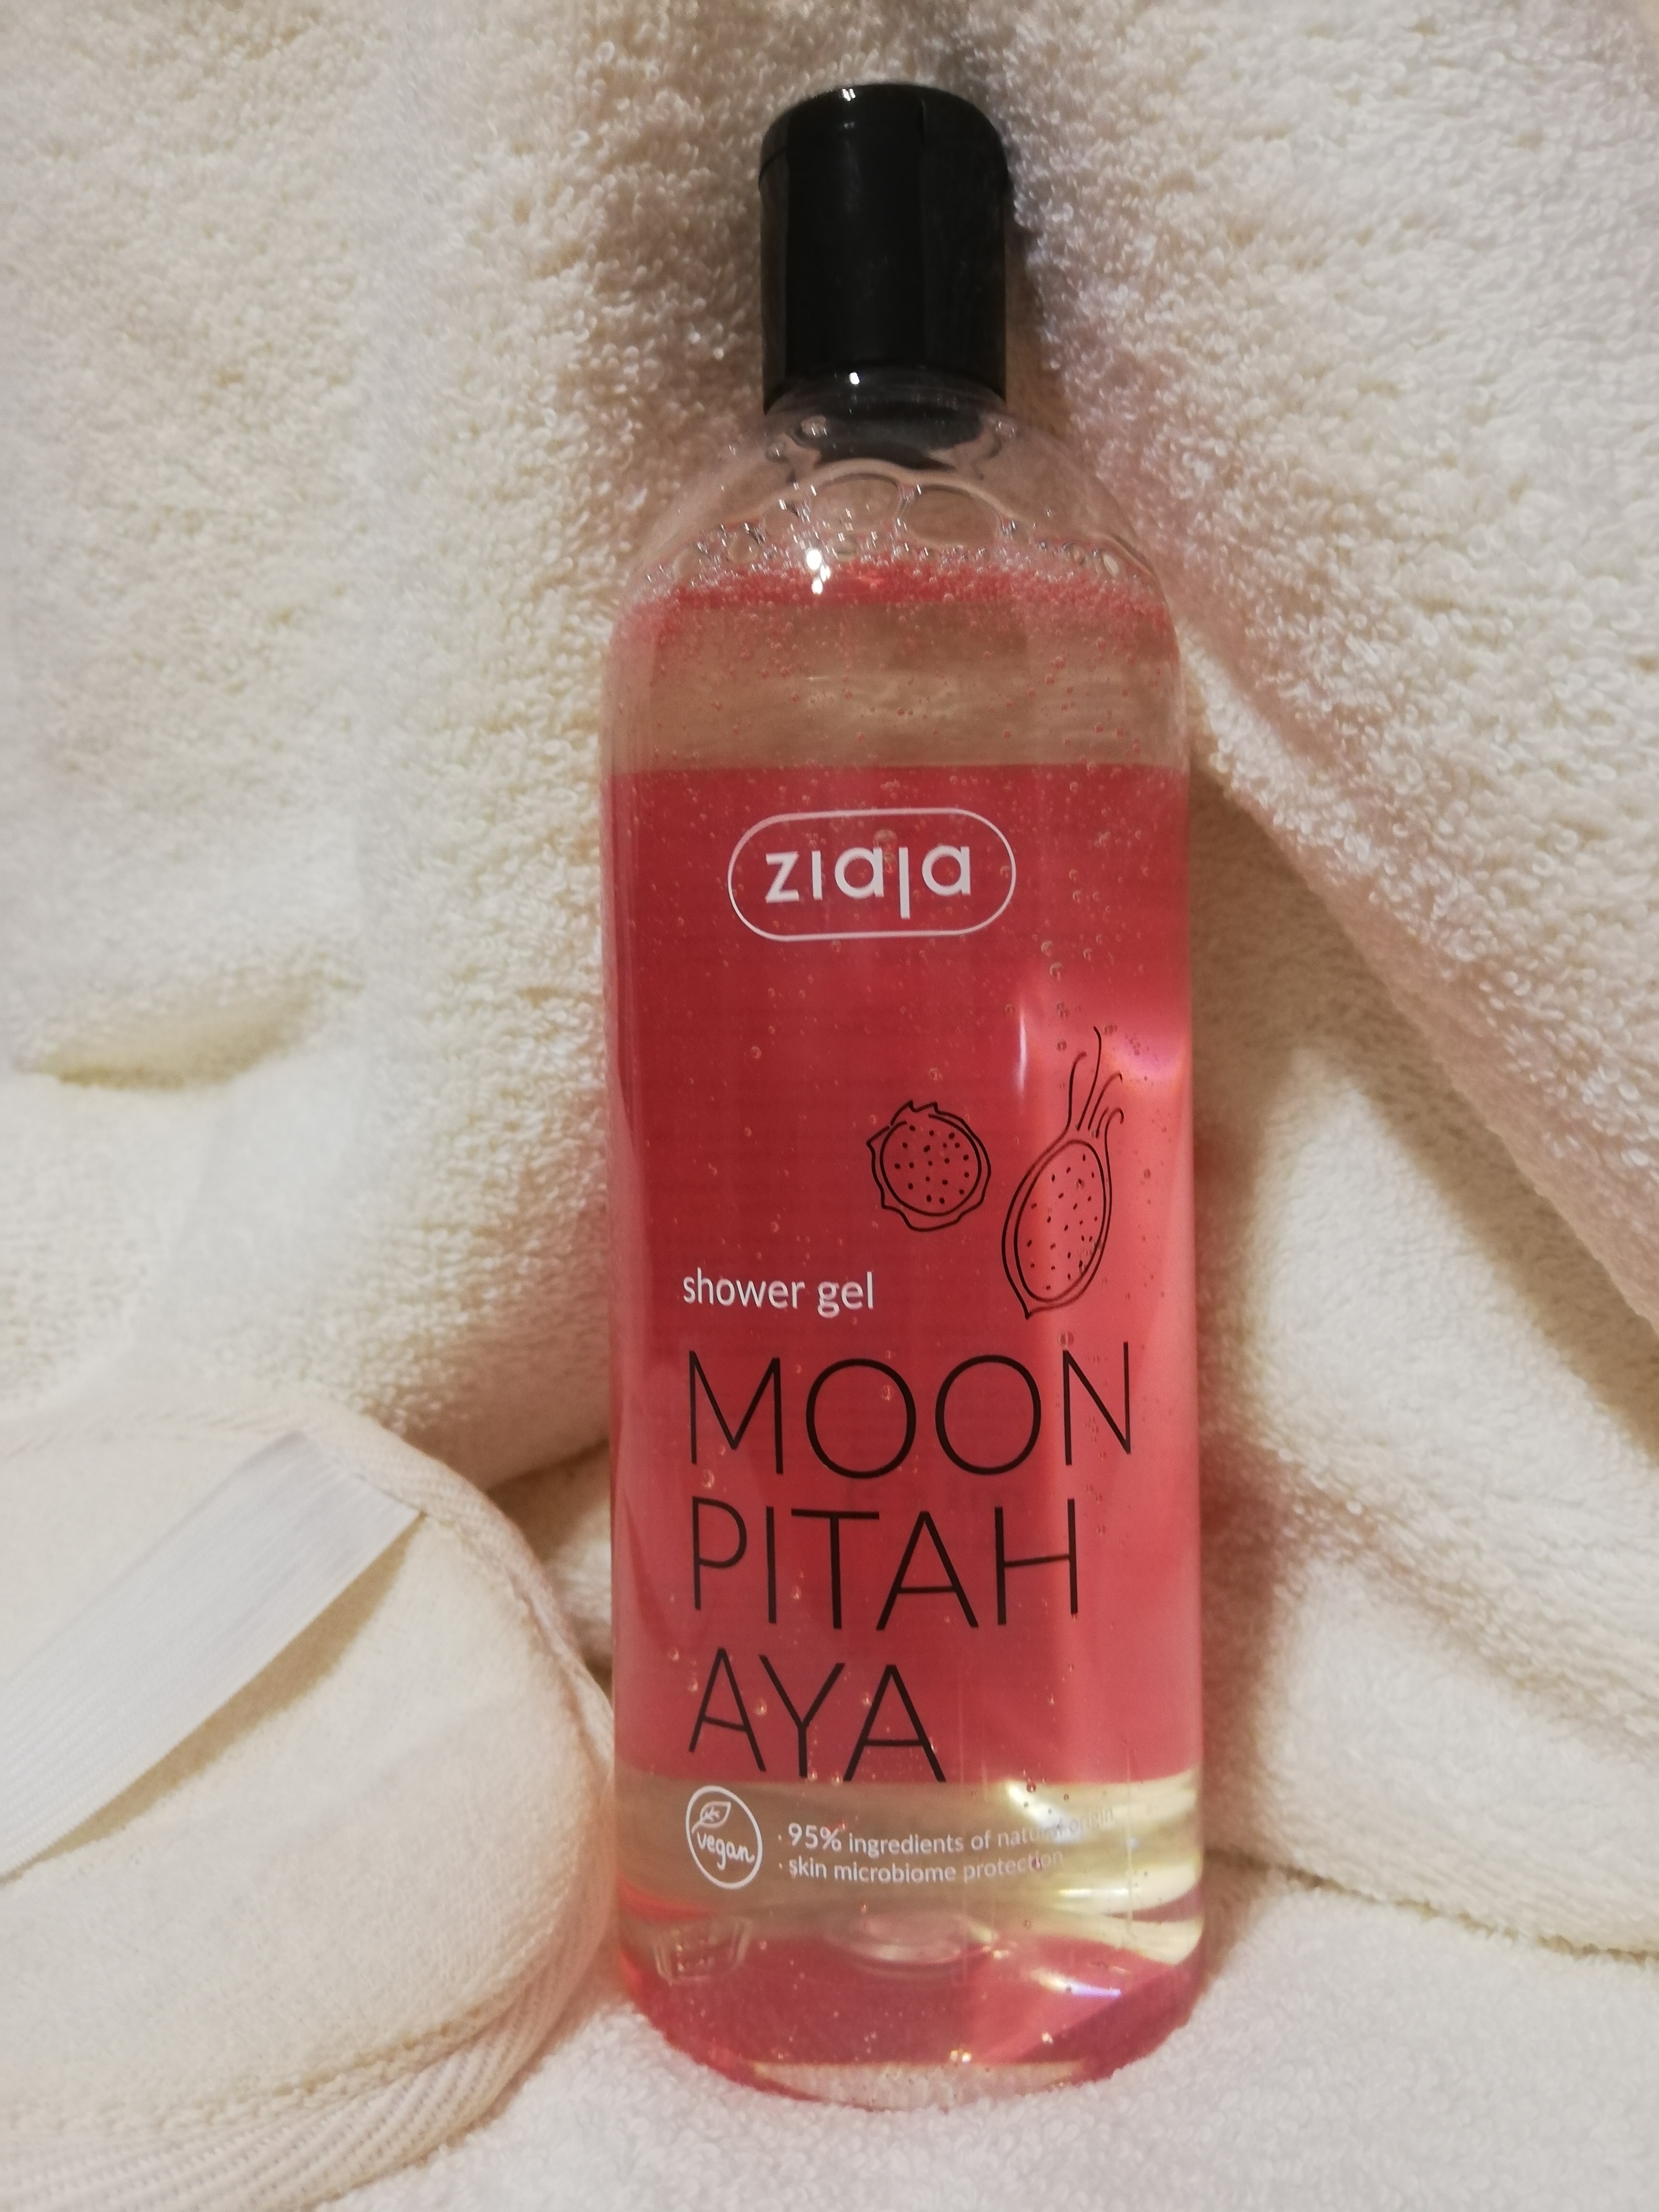 Ziaja shower gel - Moon Pitahaya